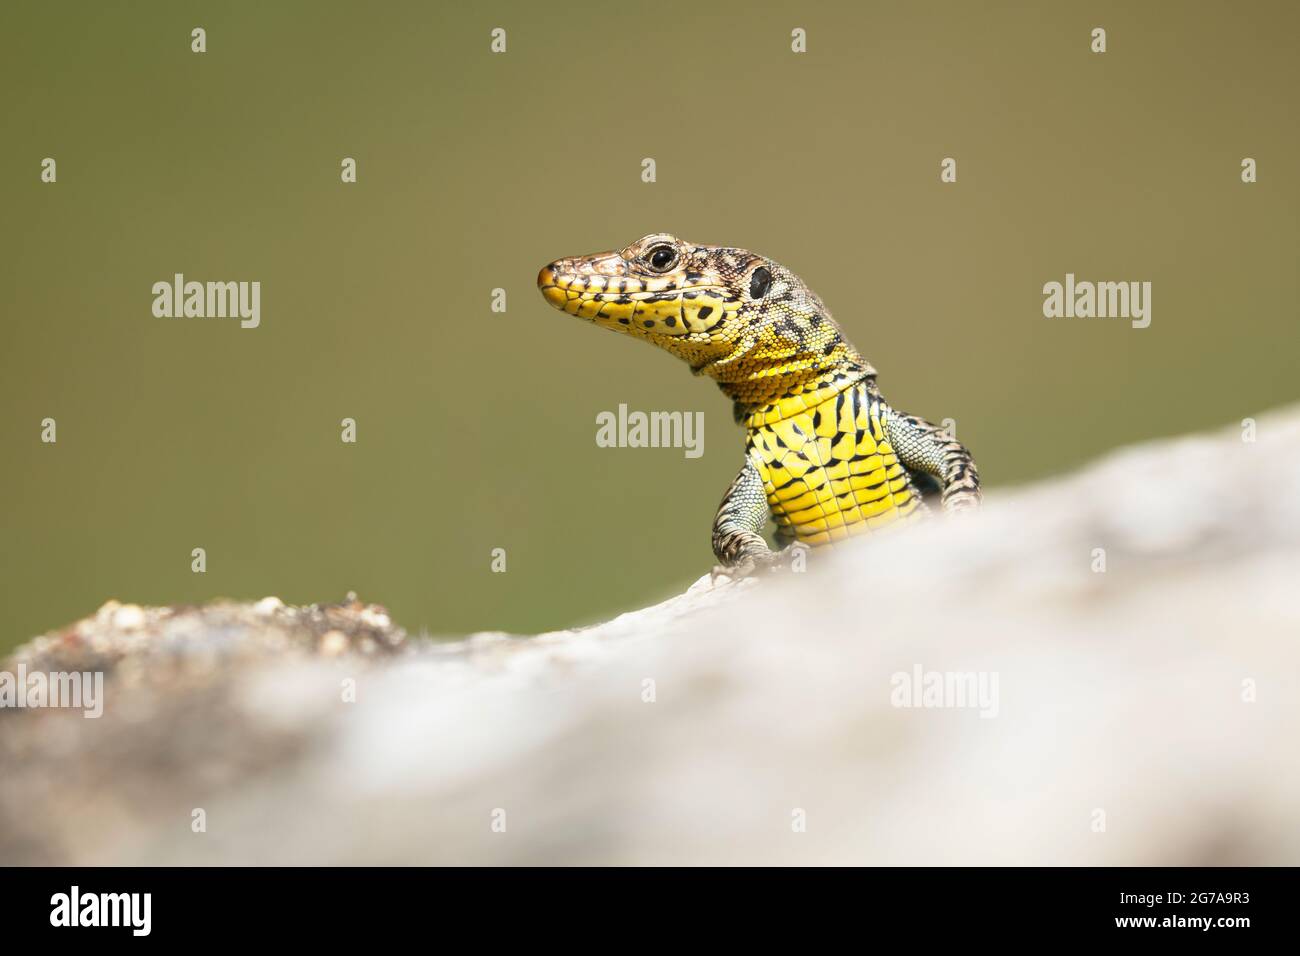 Greek Rock Lizard (Hellenolacerta graeca) peering at the photographer over the edge of a rock. Stock Photo